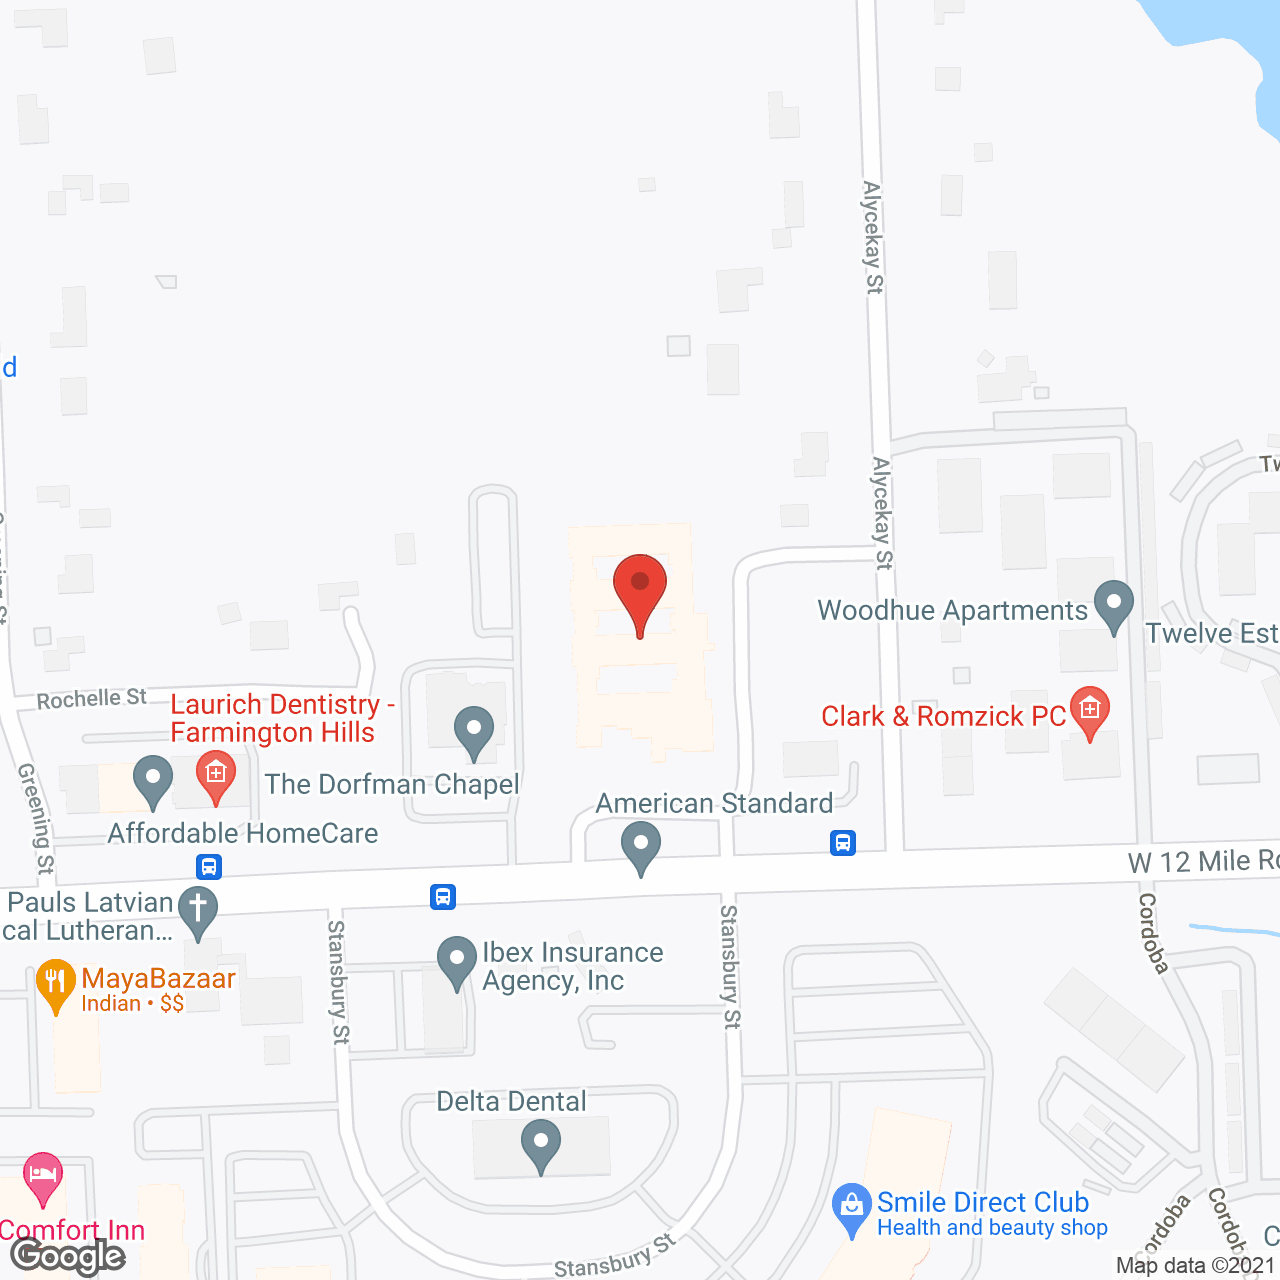 Farmington Hills Inn in google map